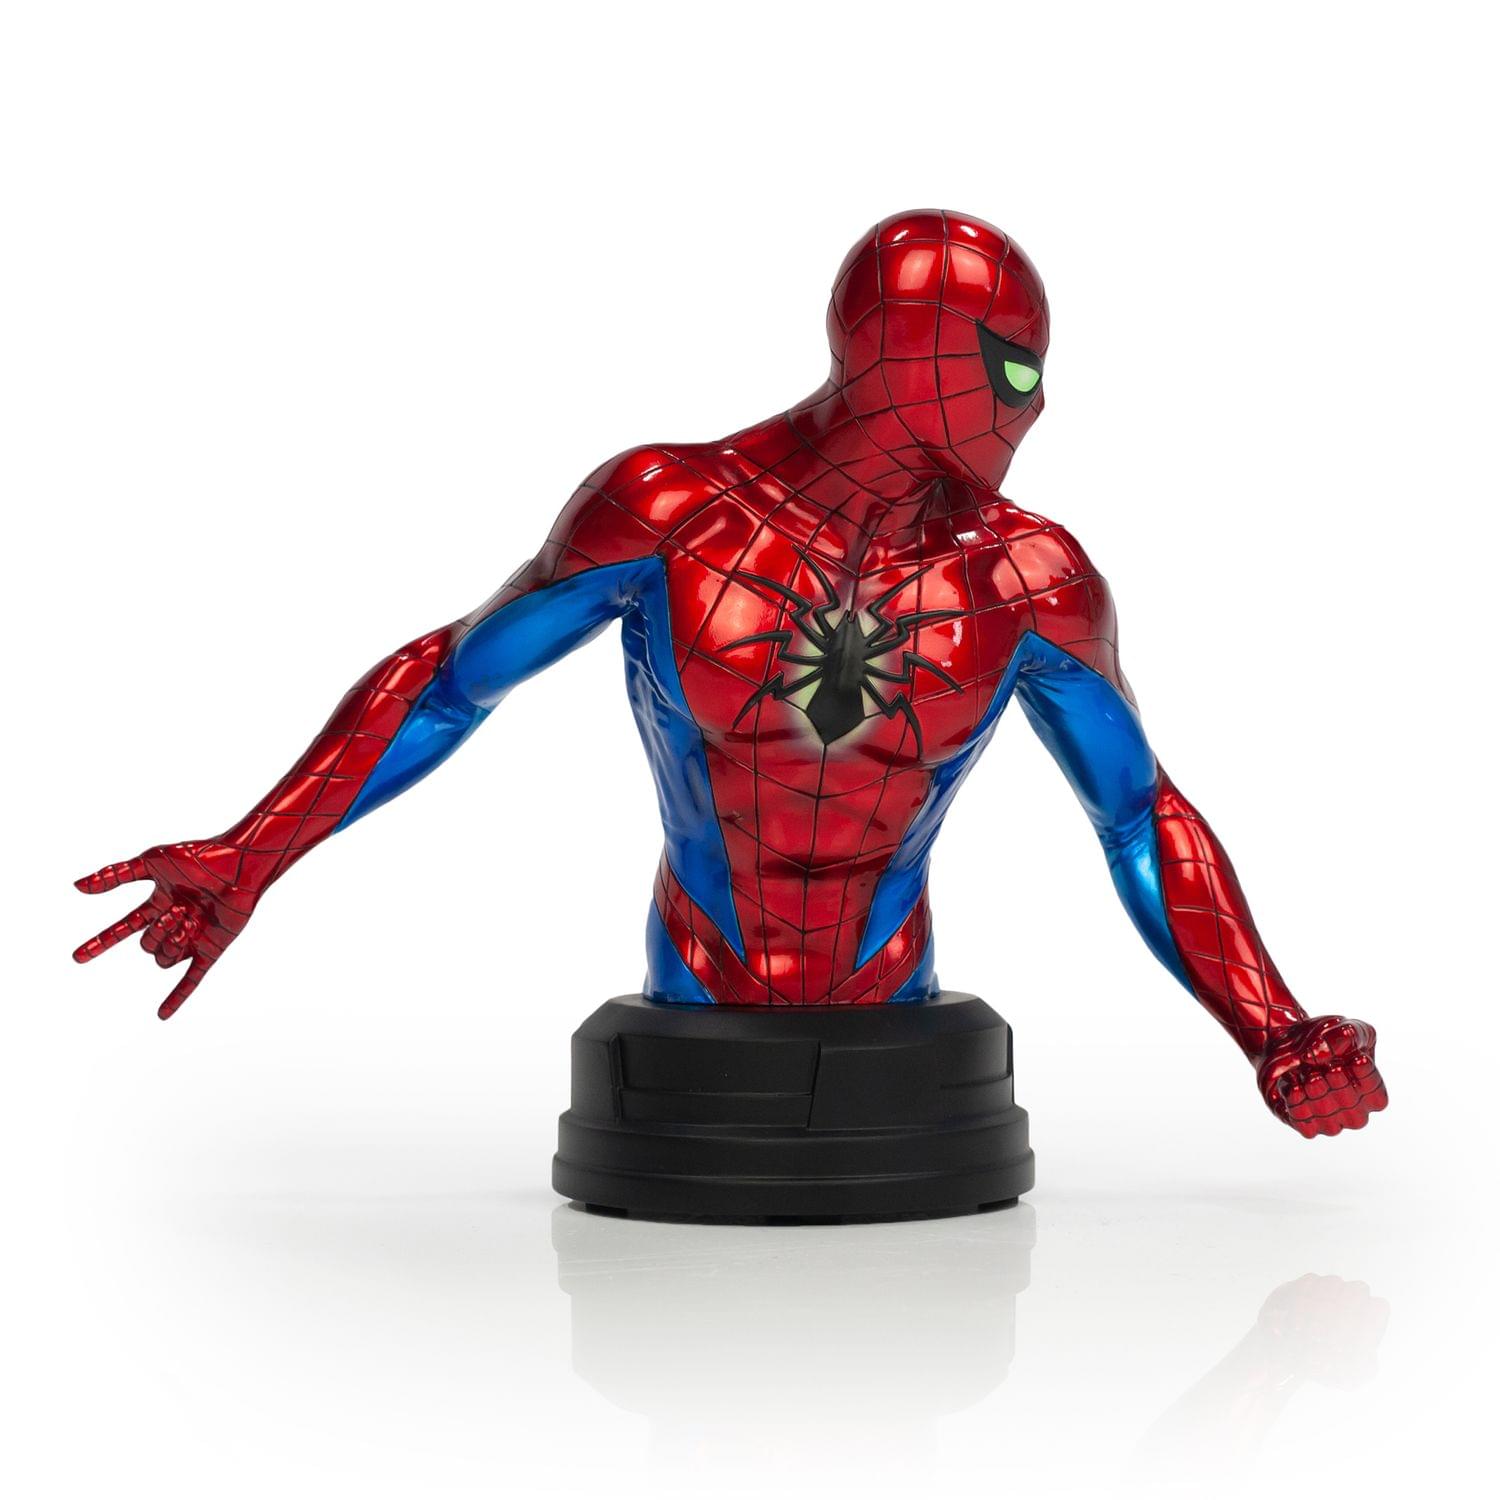 Marvel Spider-Man Collector Statue | Spider-Man Mark IV Suit | 6-Inch Height